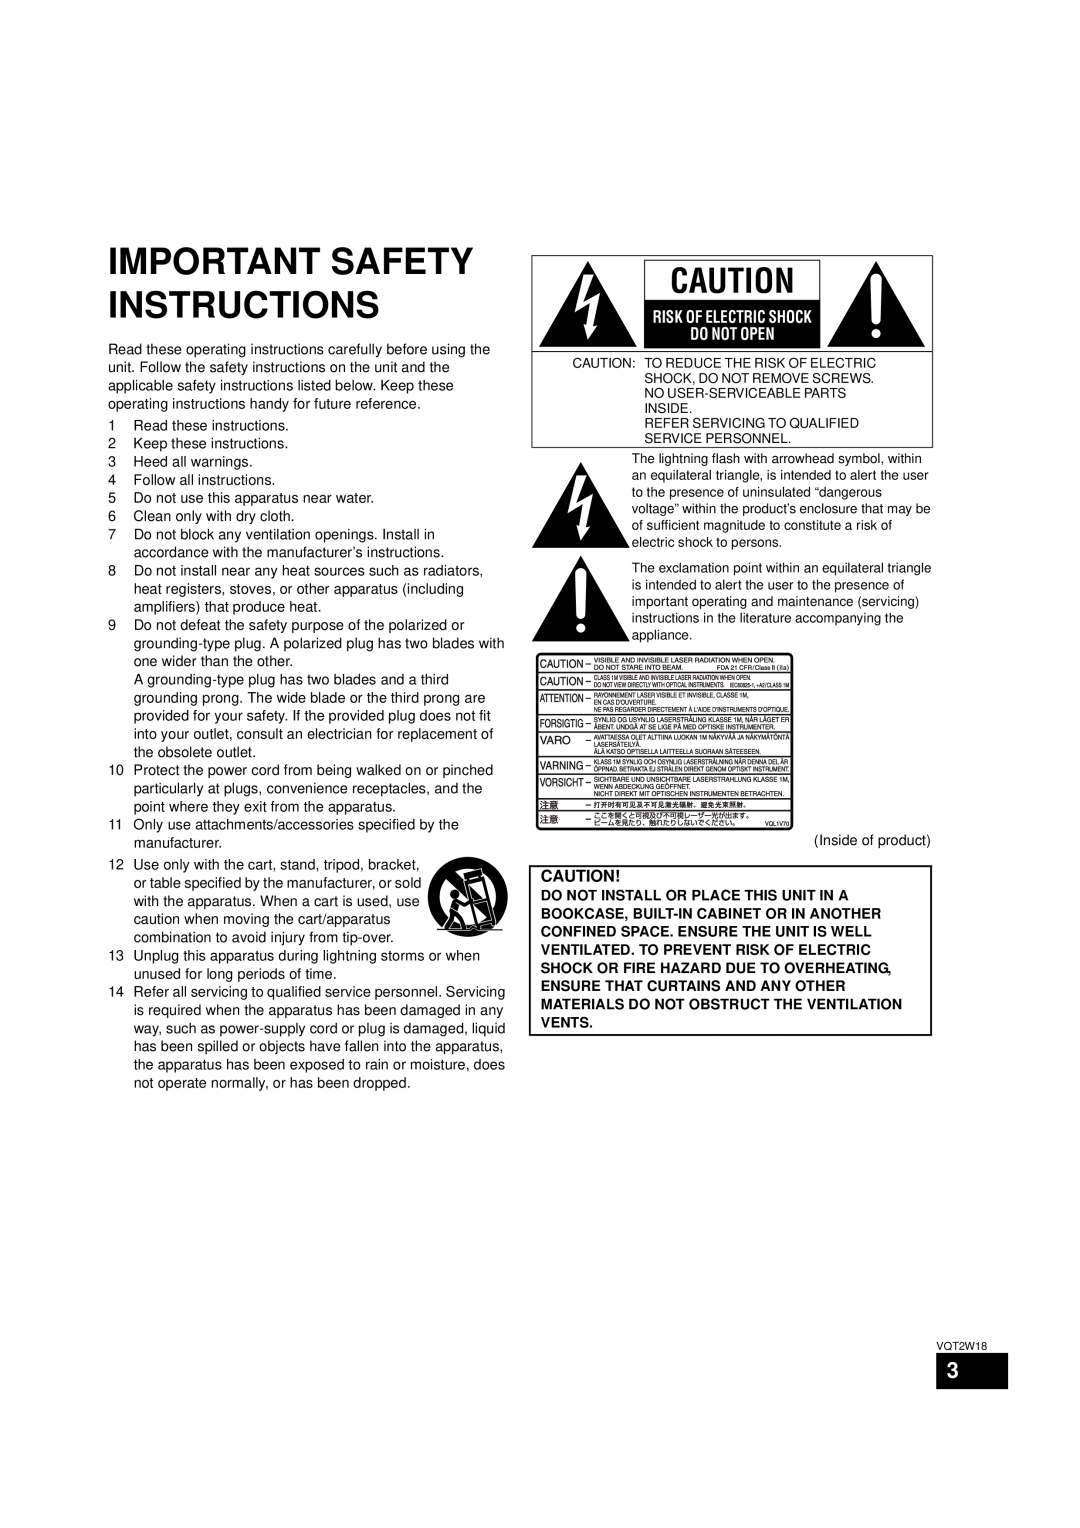 Panasonic SC-BTT750 warranty Important Safety Instructions, Risk Of Electric Shock Do Not Open 